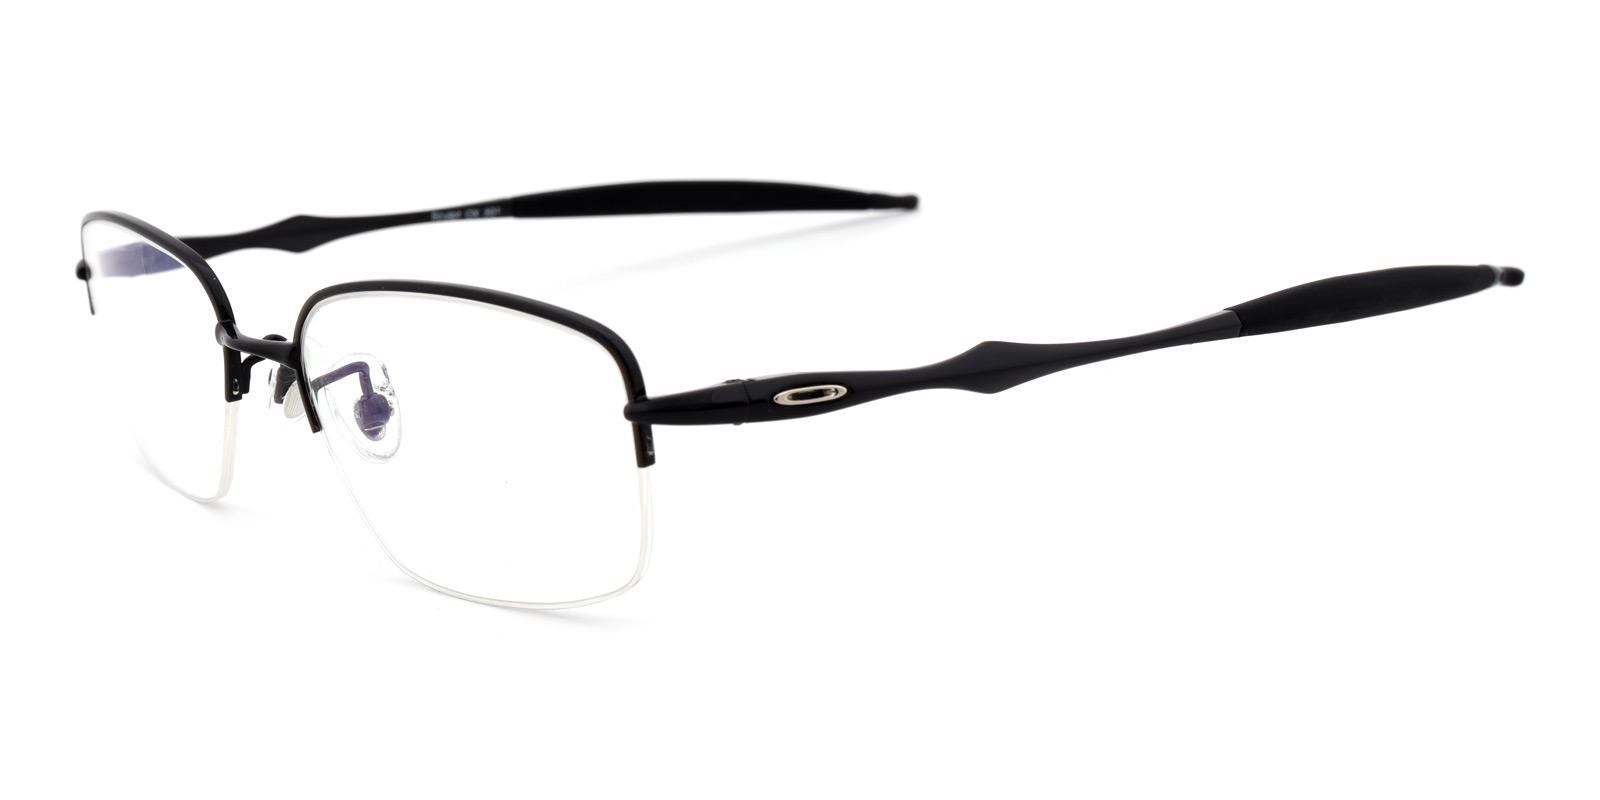 Sean-Black-Rectangle-Titanium-Eyeglasses-detail